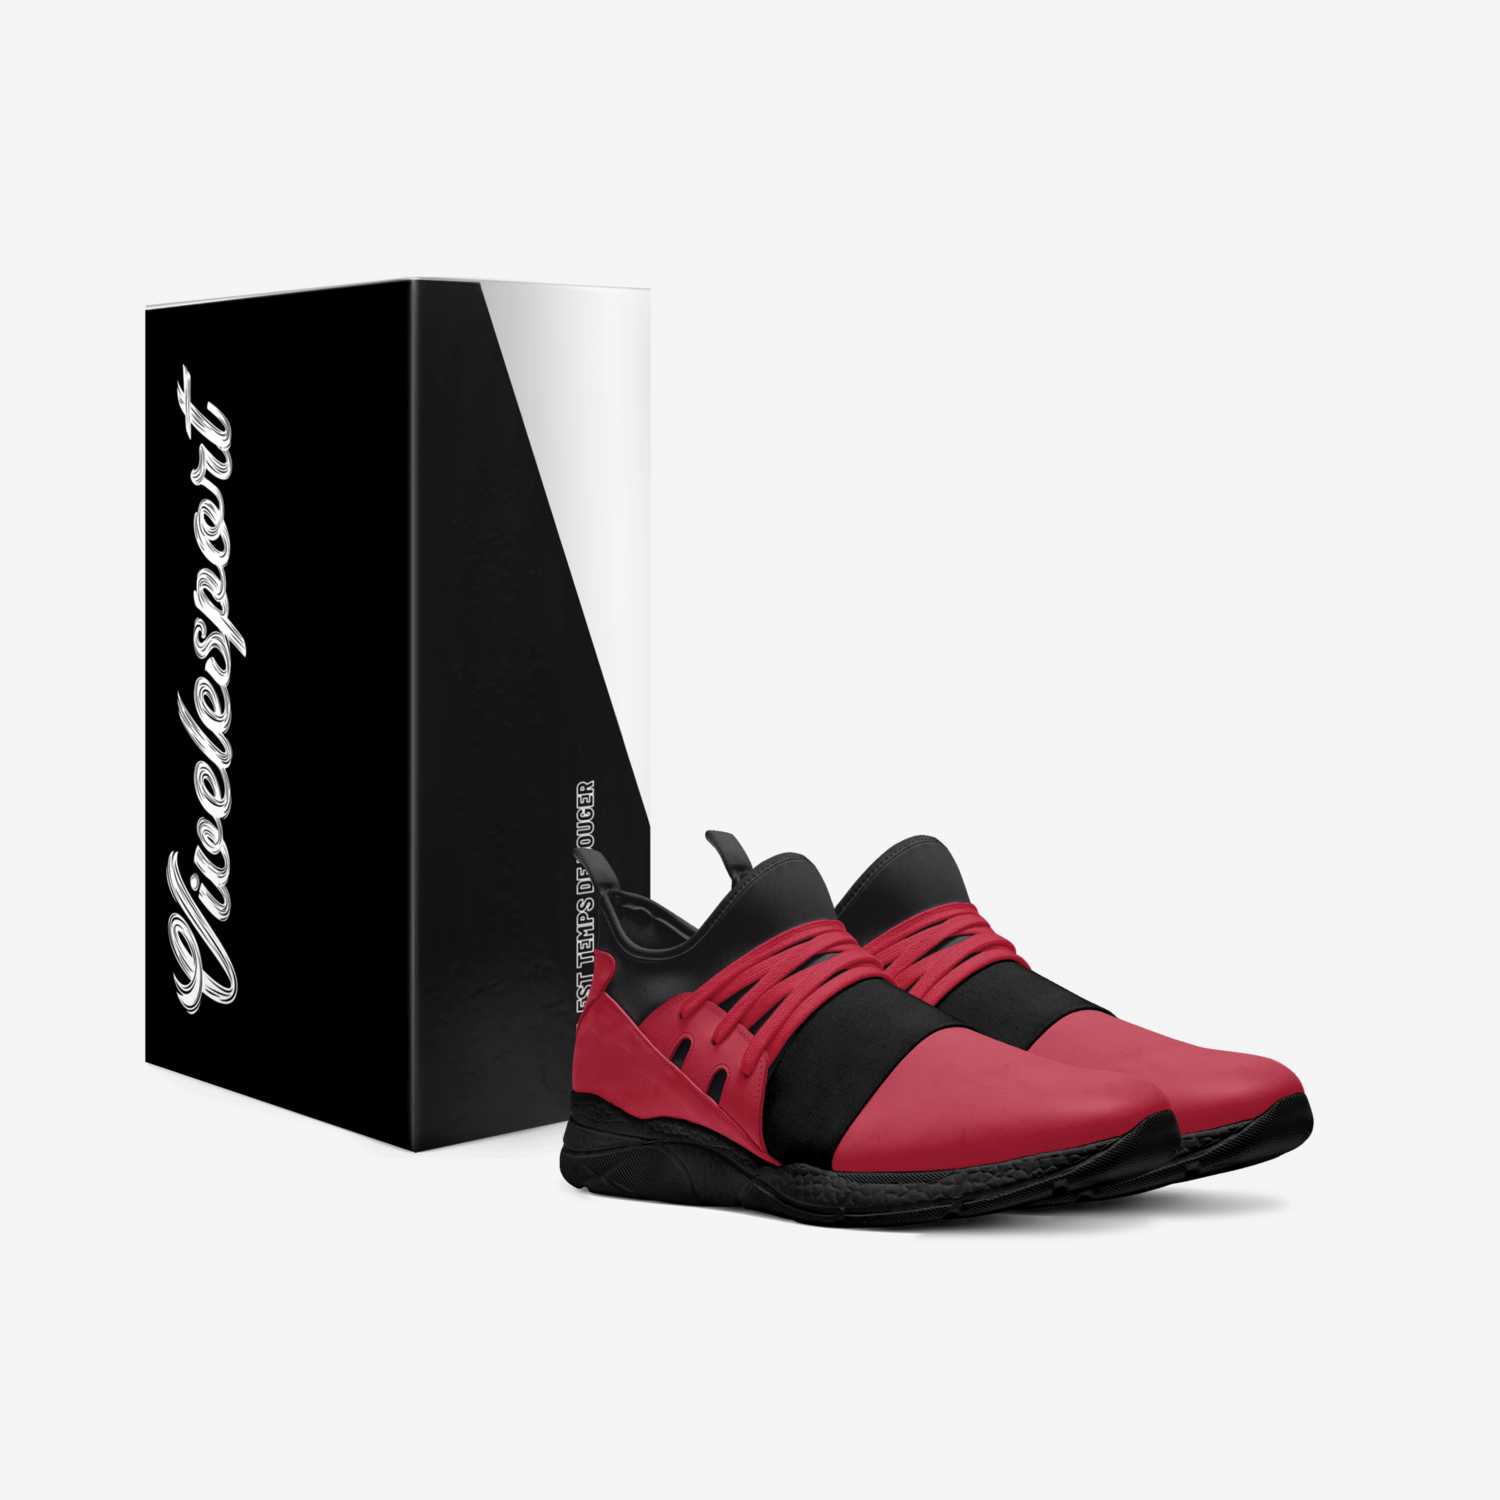 Skyll custom made in Italy shoes by Skyll Lamine | Box view